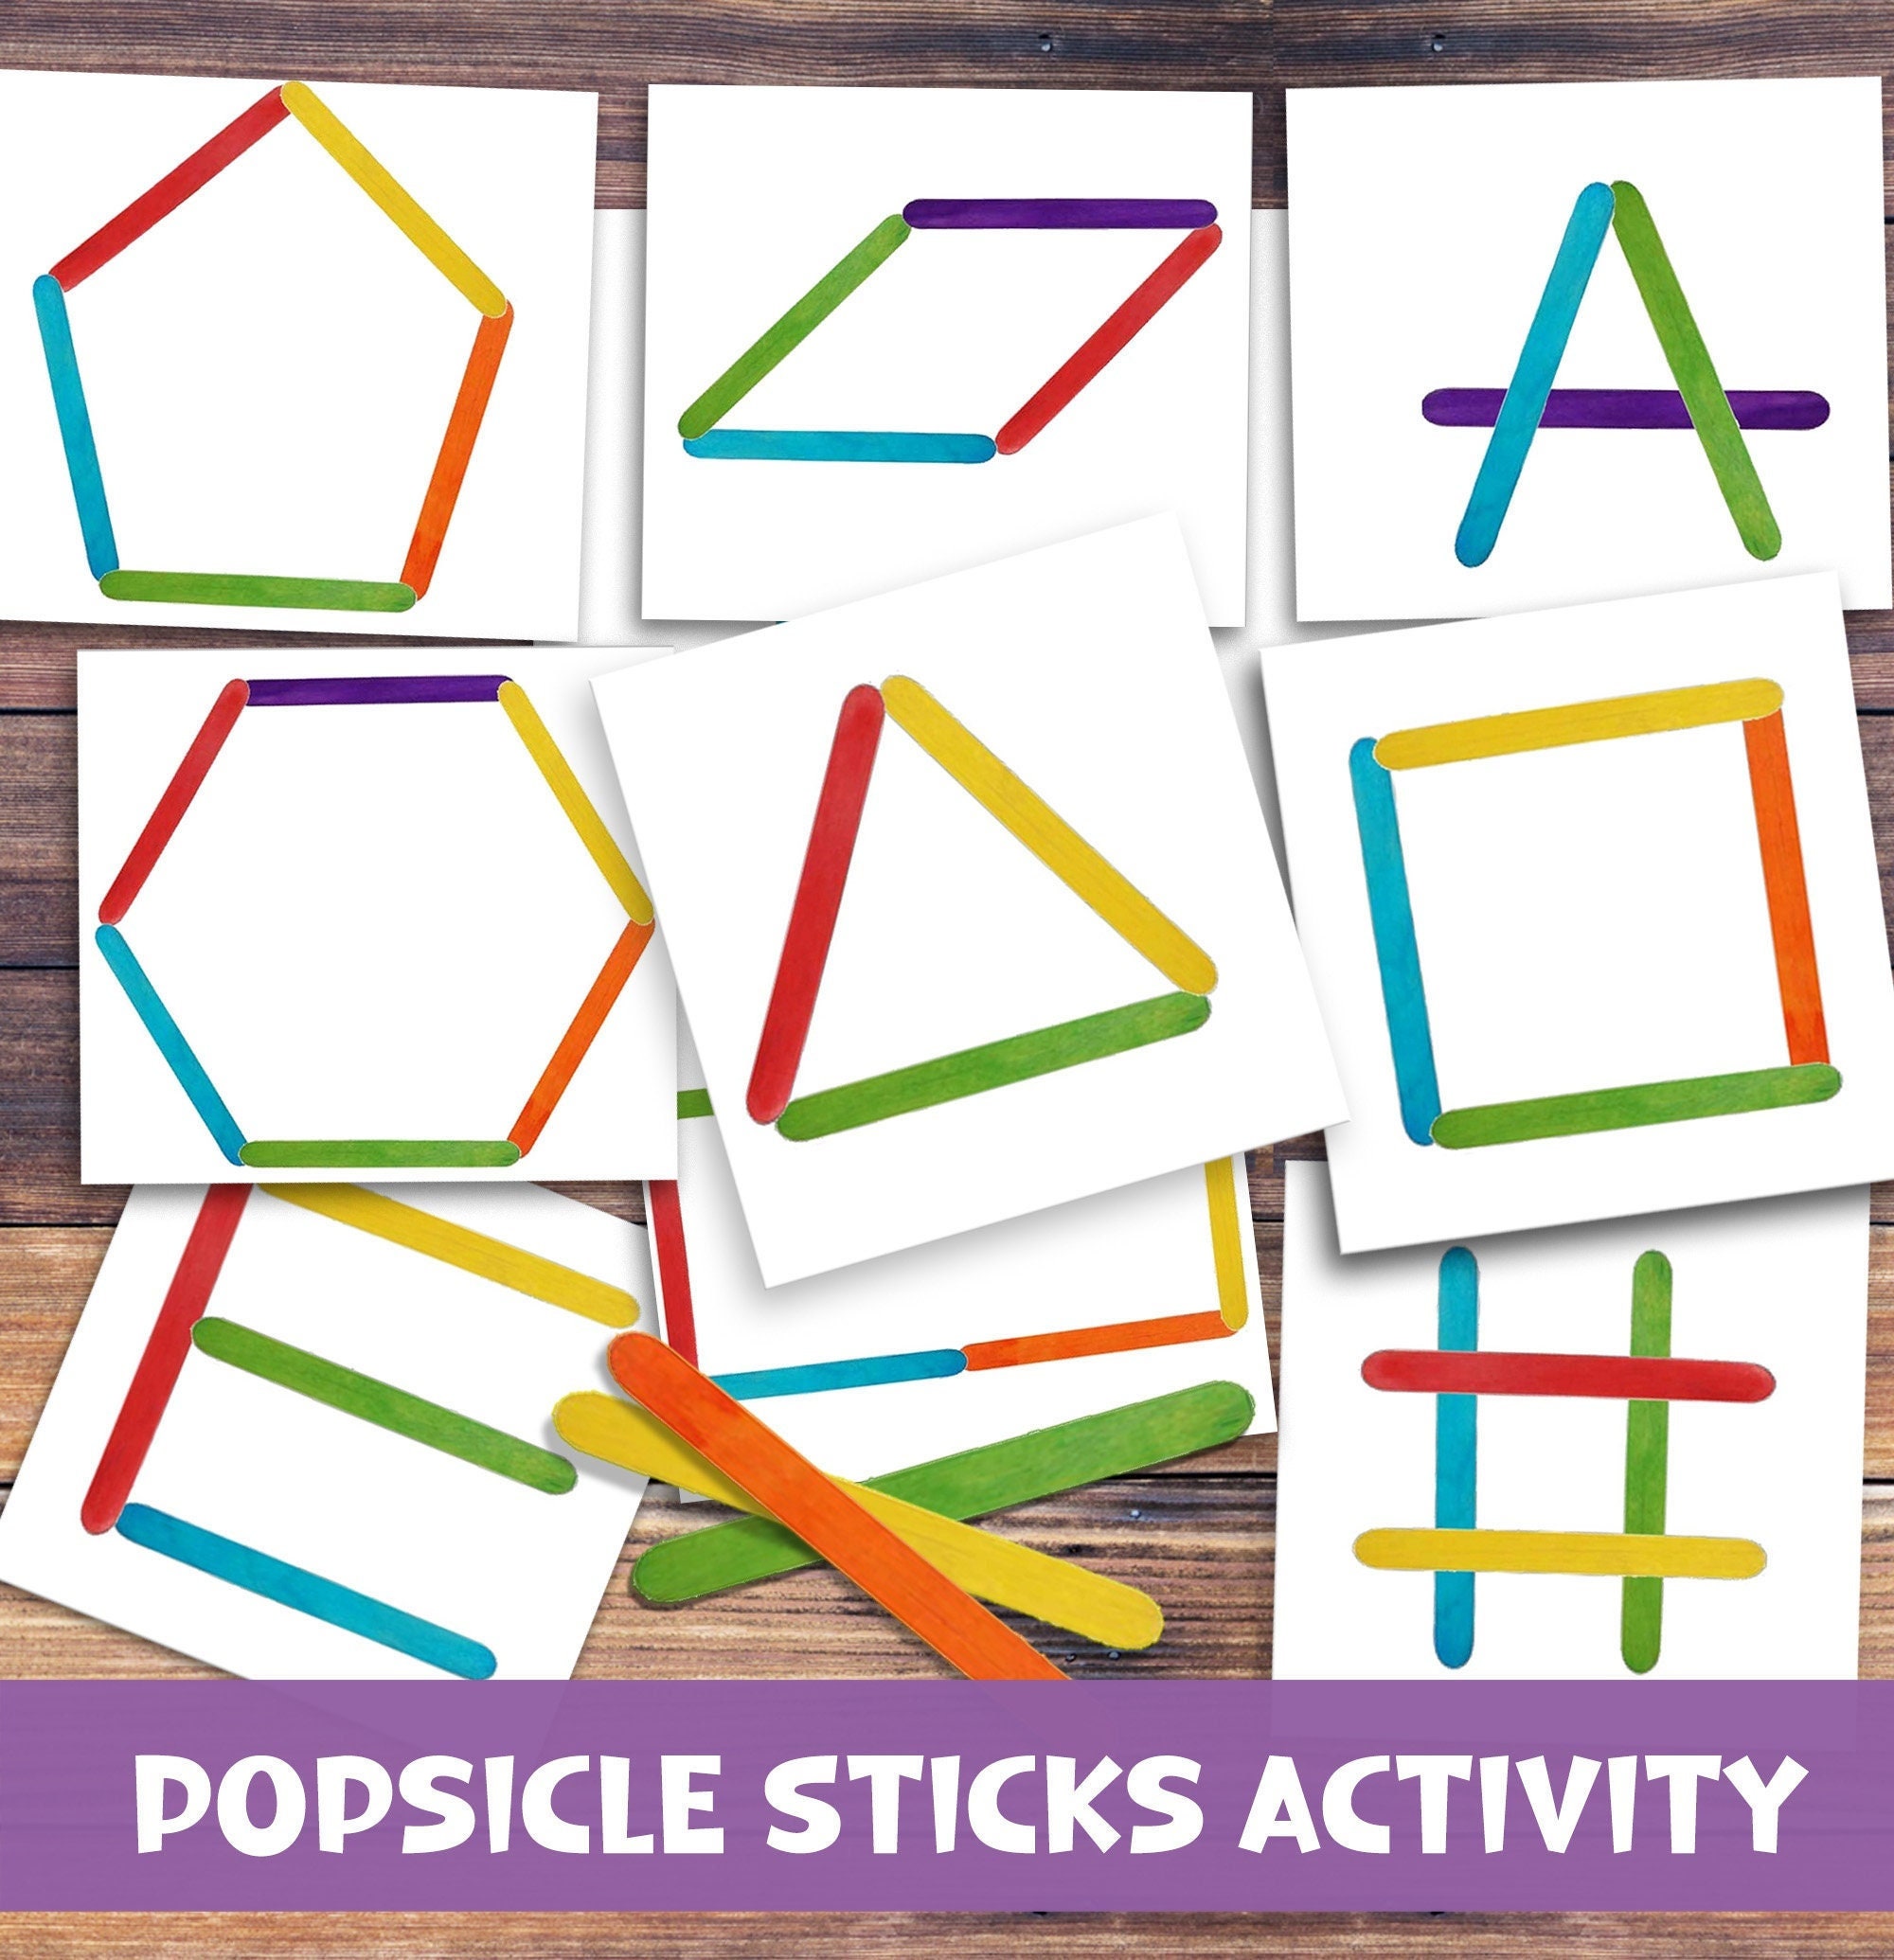 Wooden Popsicle Sticks 